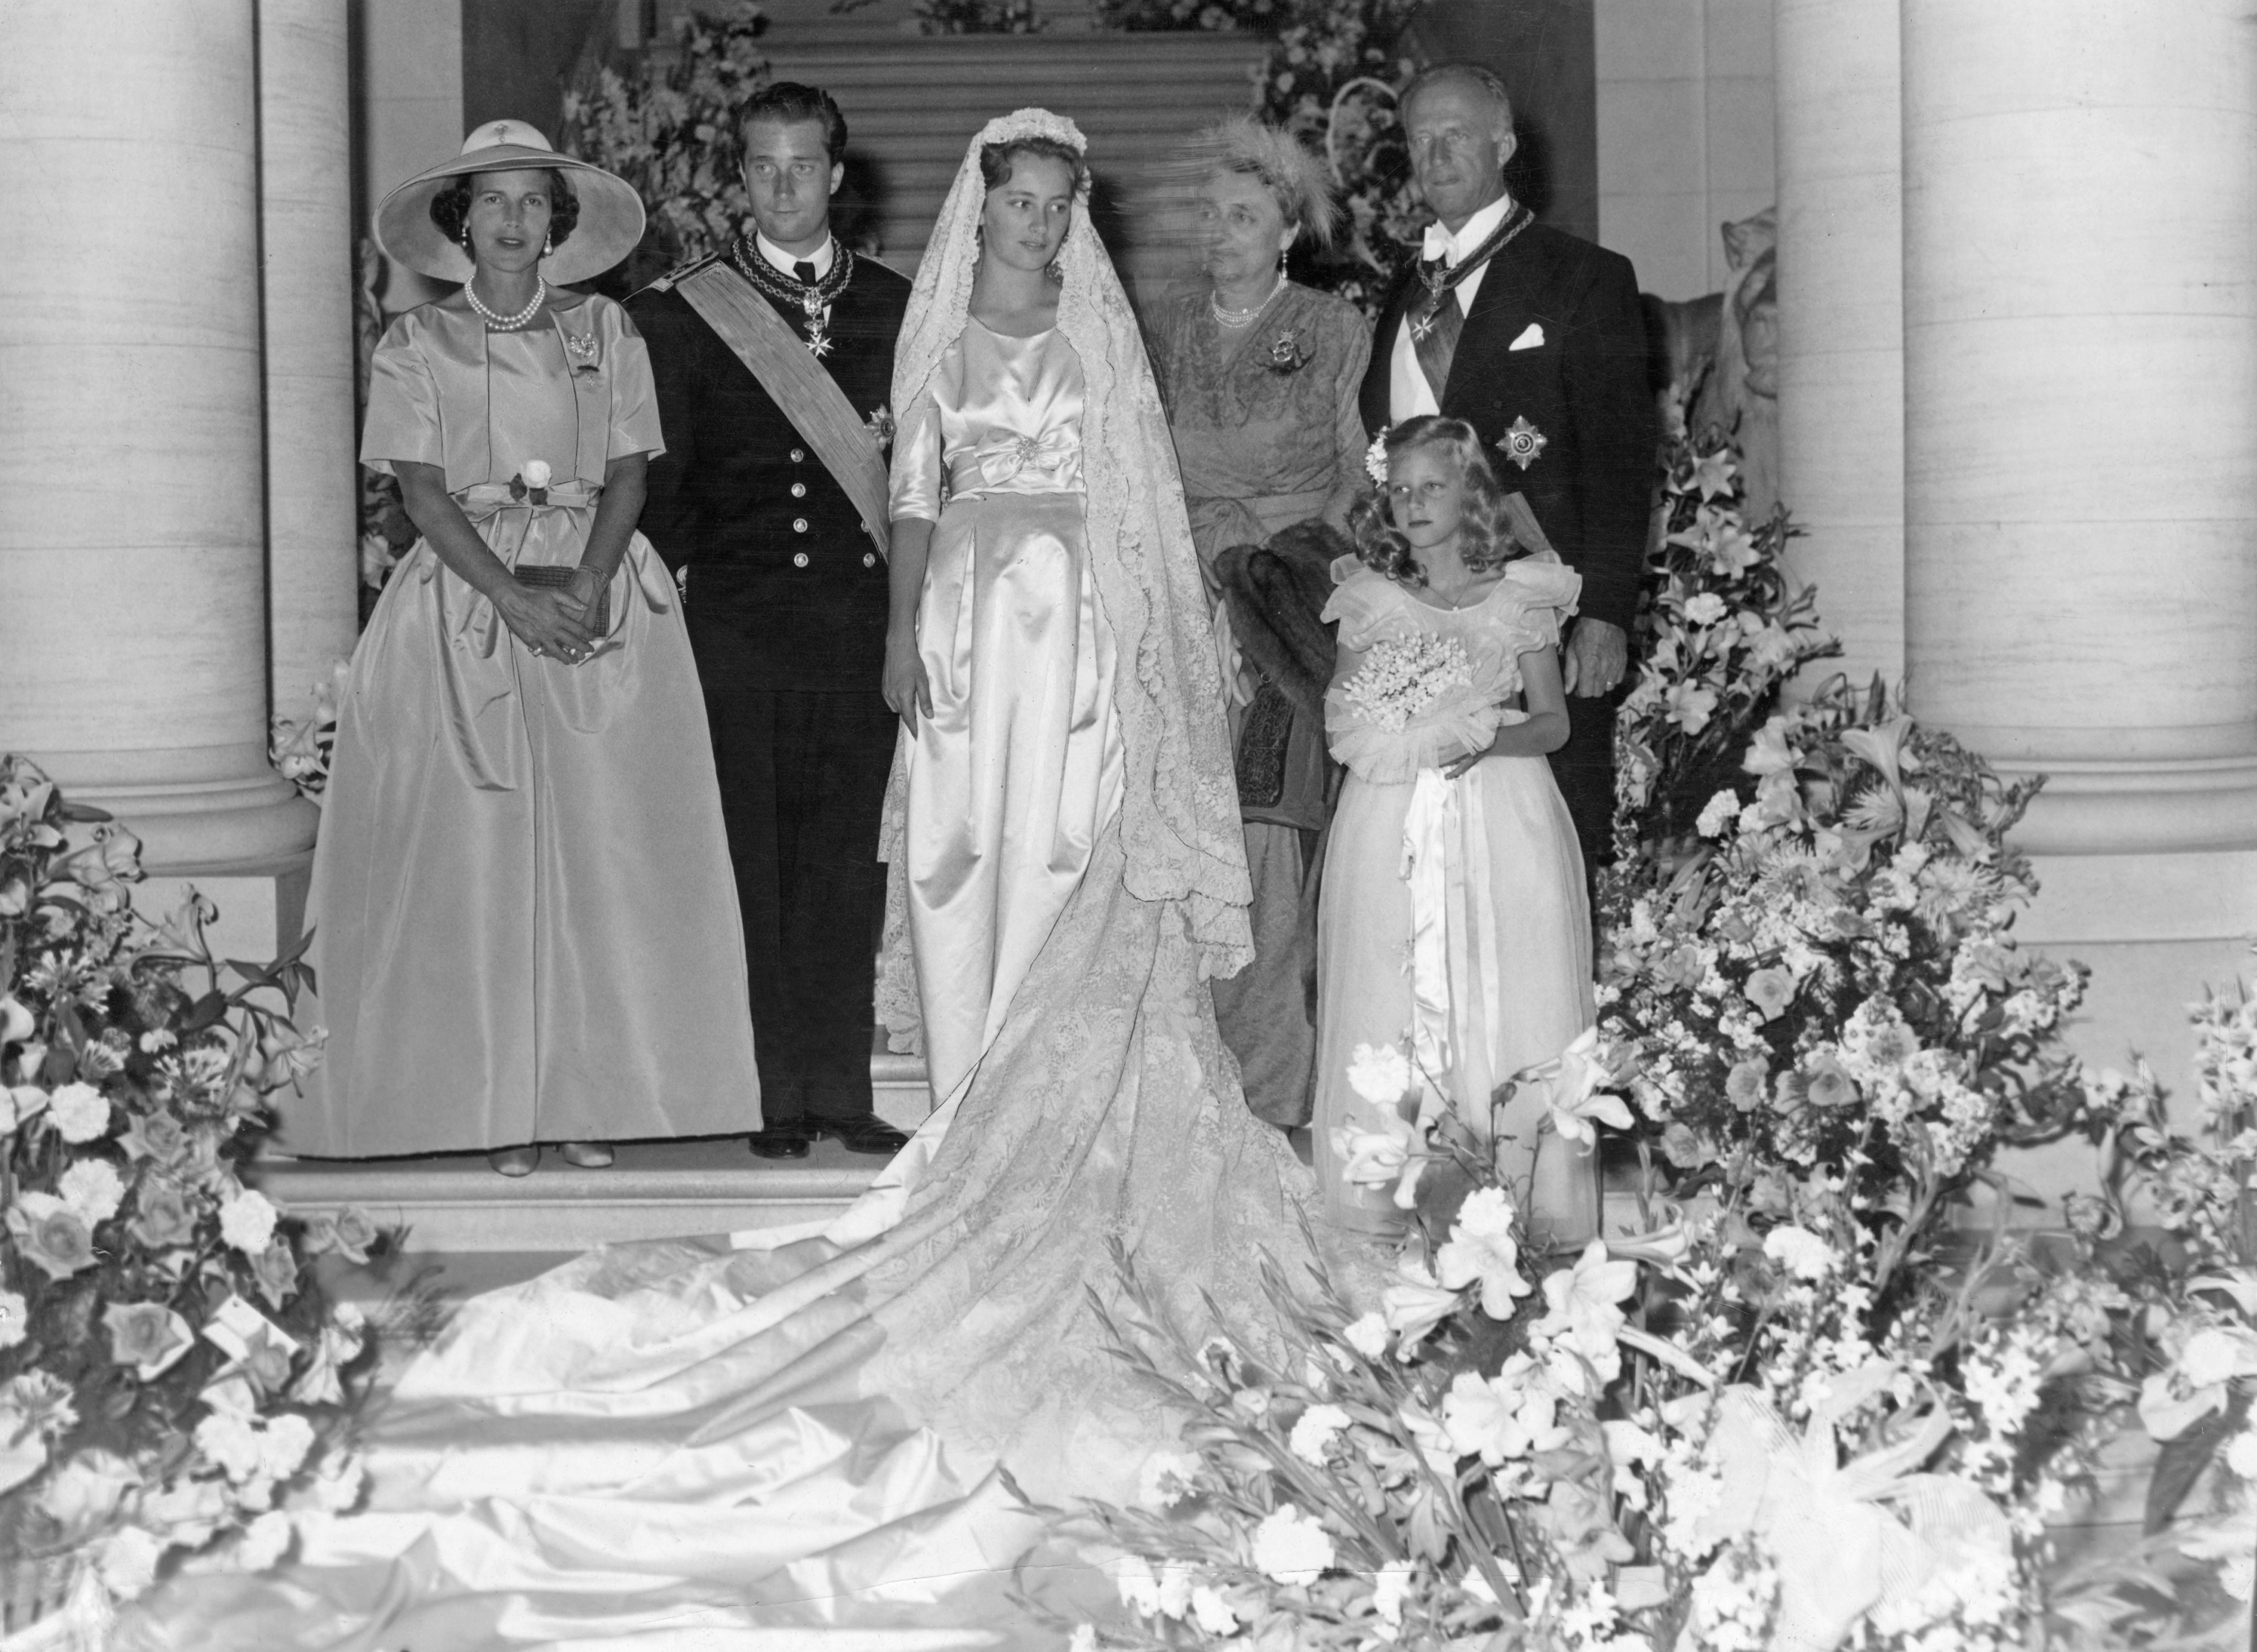 Prince Albert Weds Princess Paola